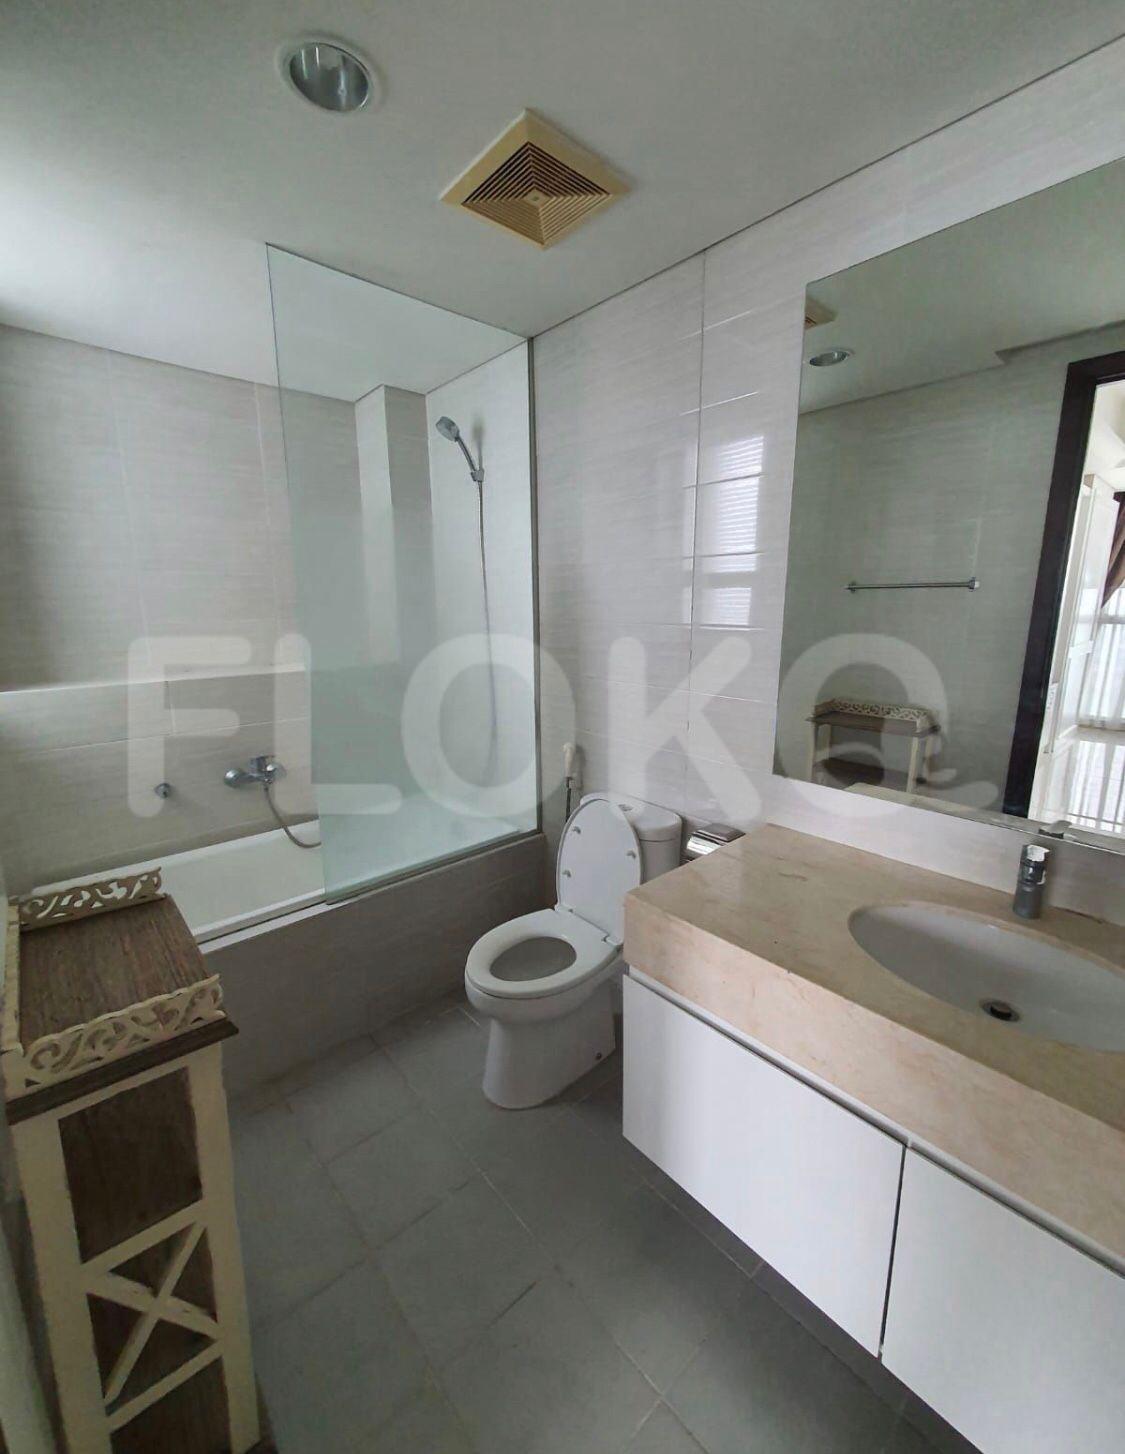 2 Bedroom on 17th Floor fke062 for Rent in Kemang Village Residence